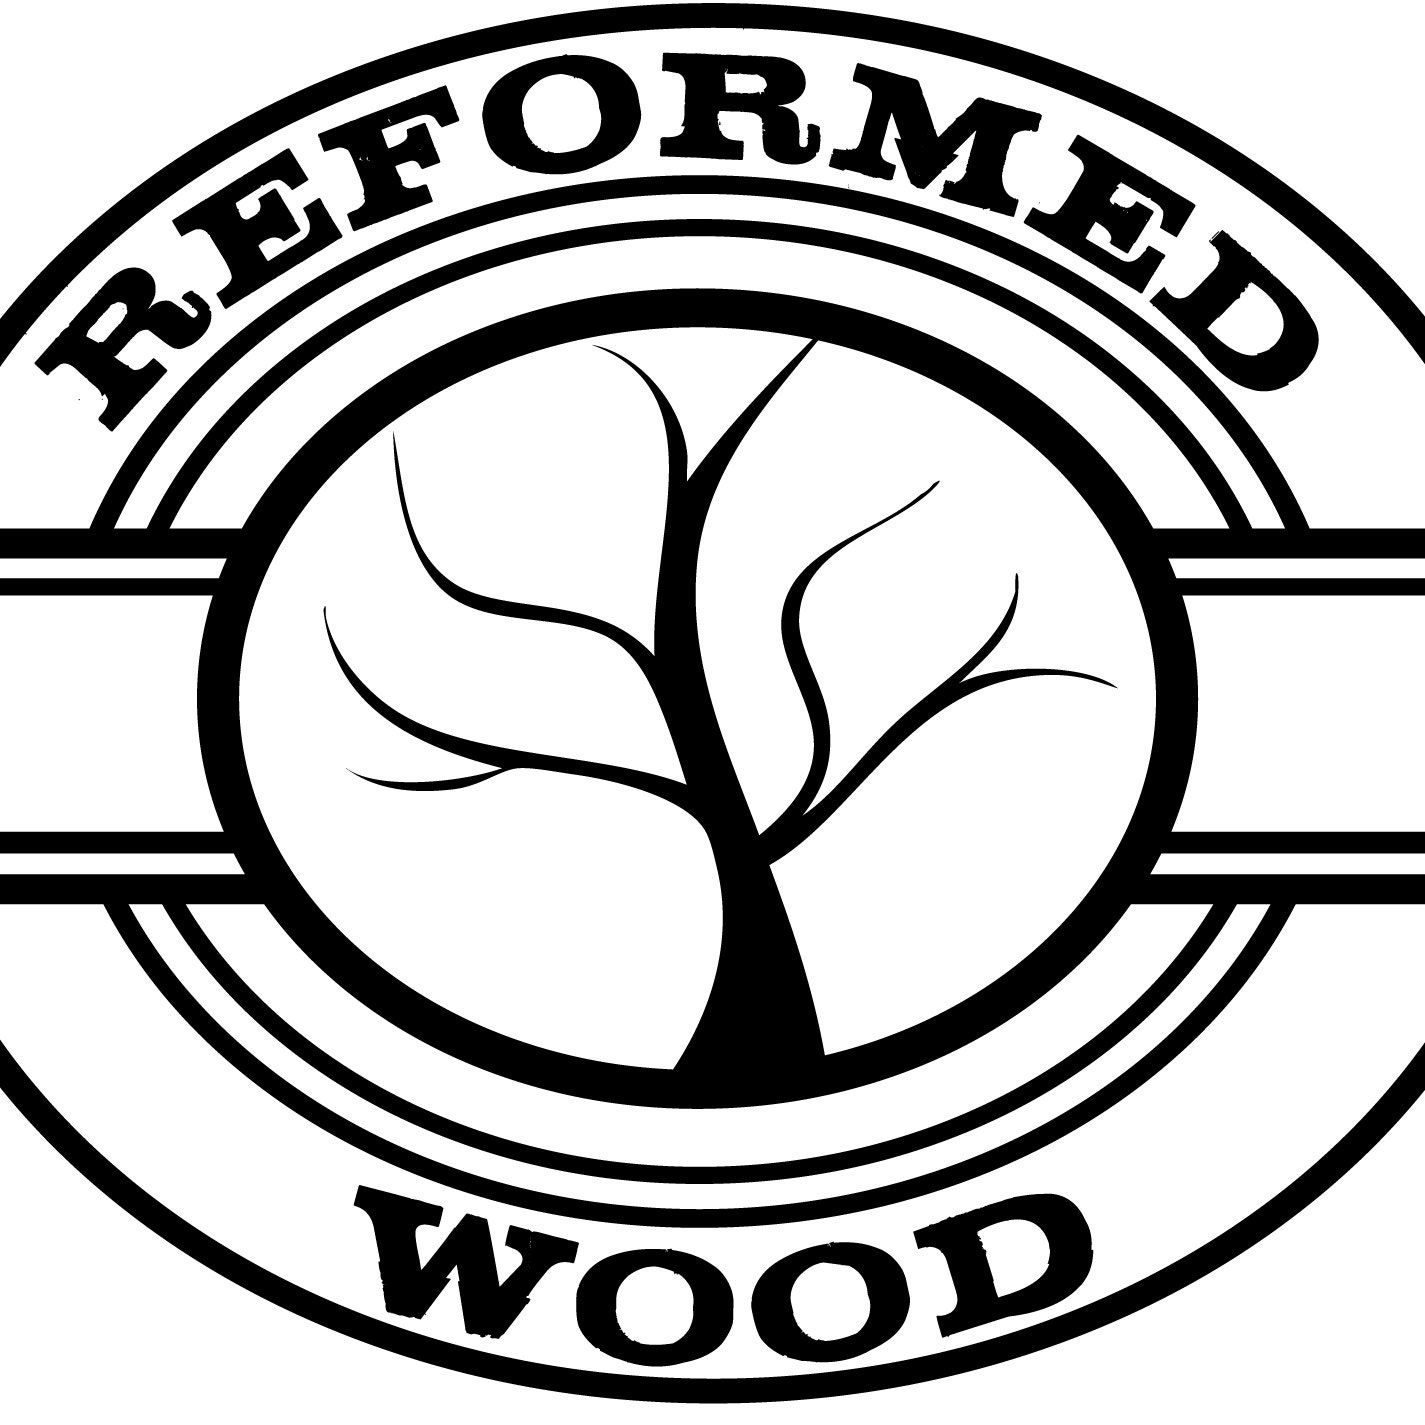 ReformedWood